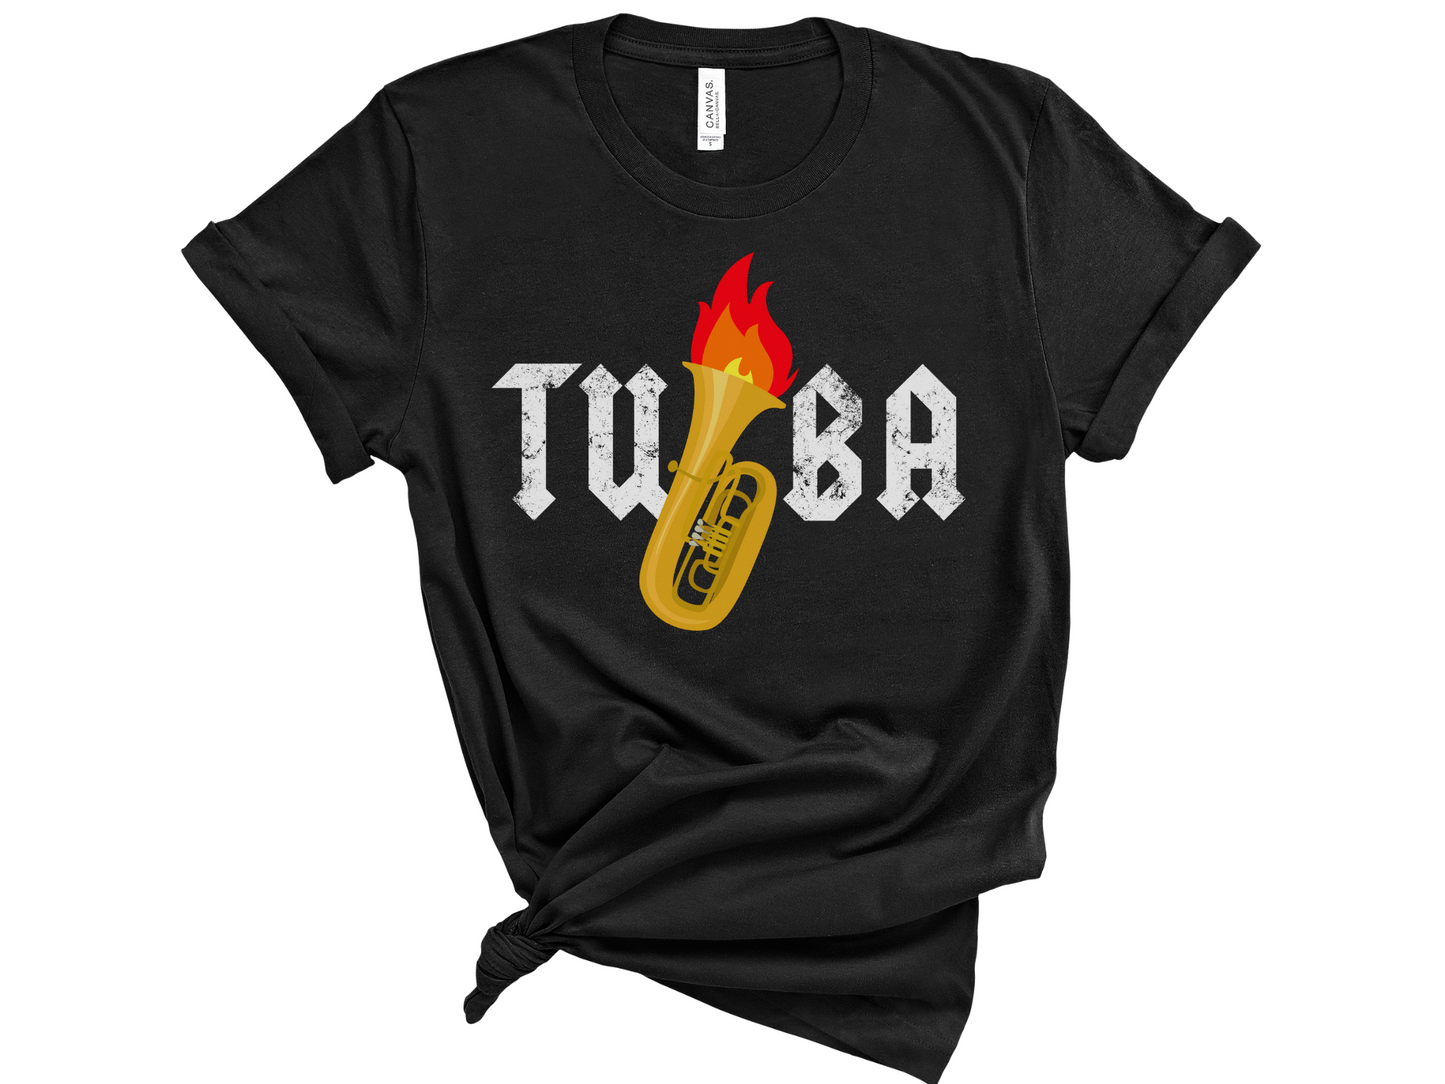 Tuba Flames Unisex T-Shirt